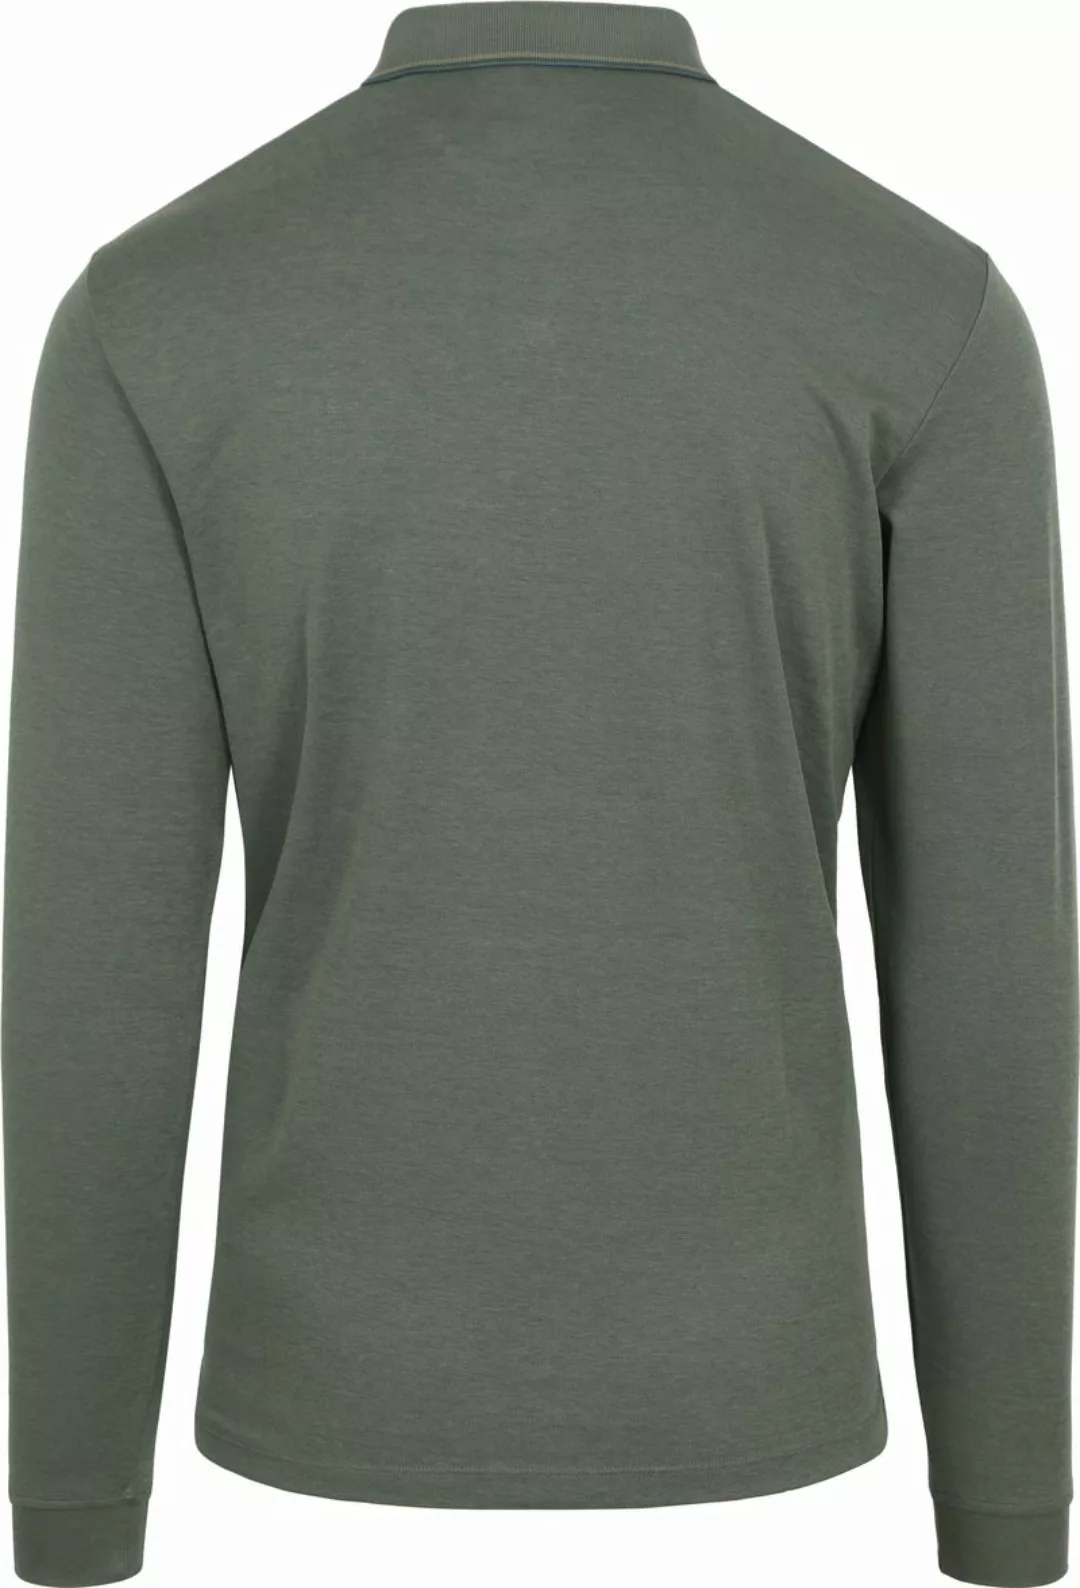 Casa Moda Long Sleeve Poloshirt Grün - Größe 4XL günstig online kaufen